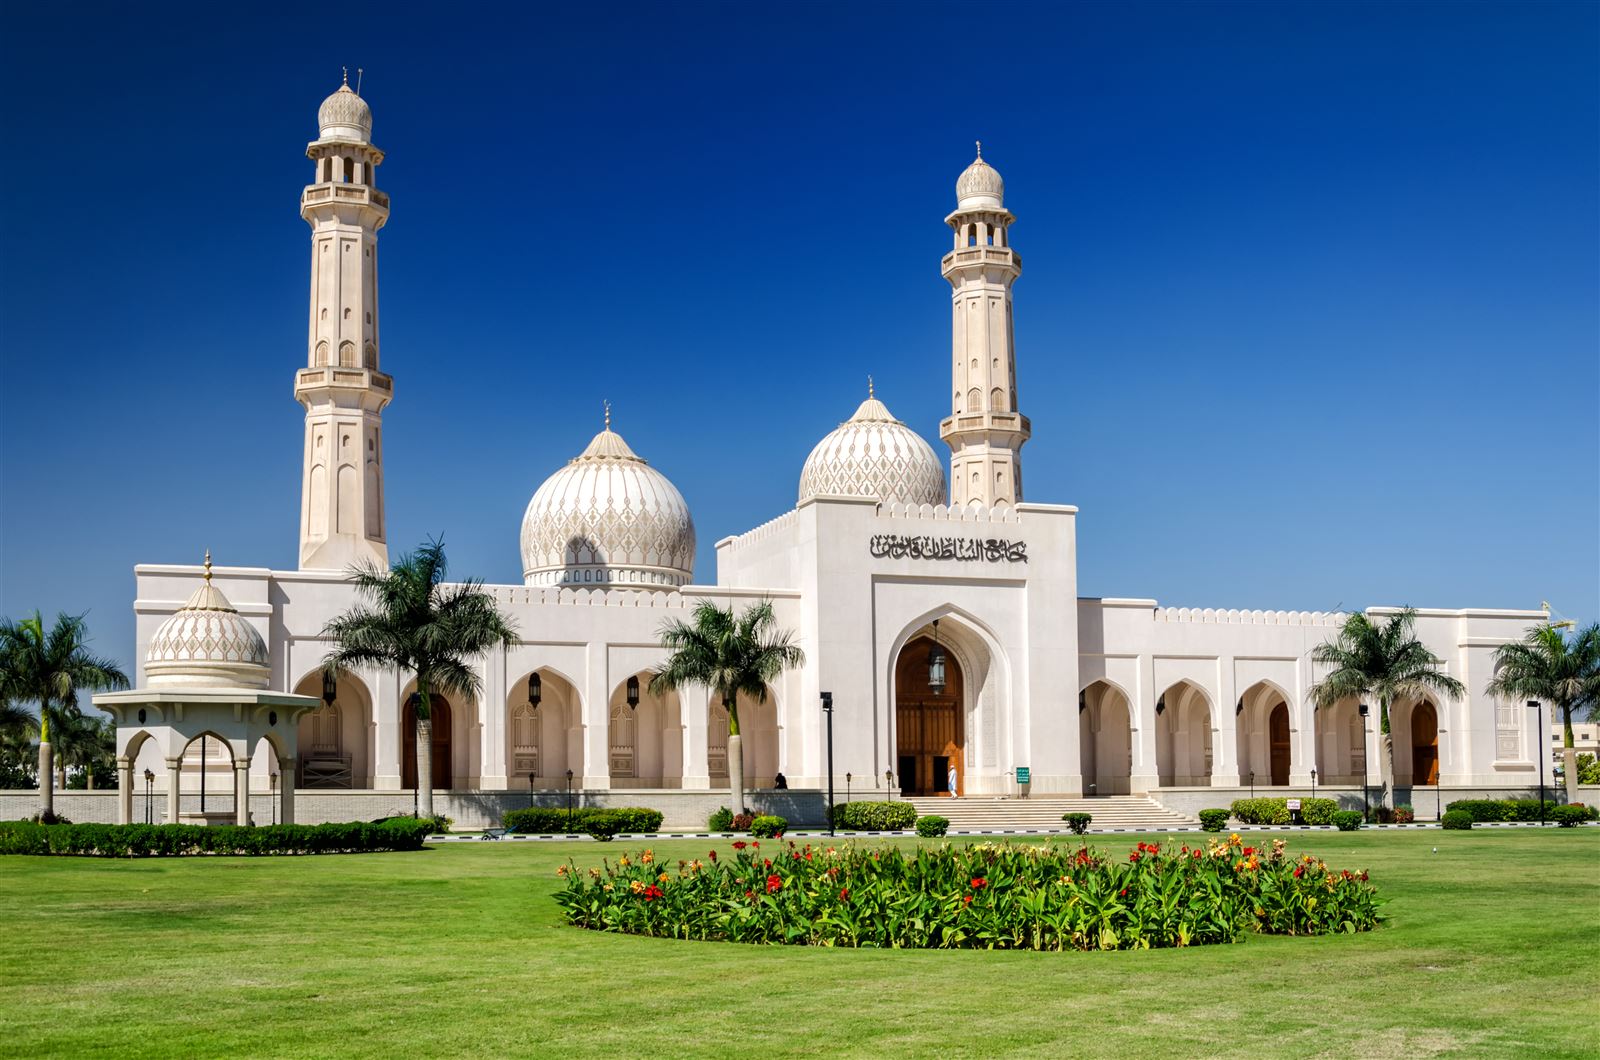 Sultan Qaboos Grand Moschee